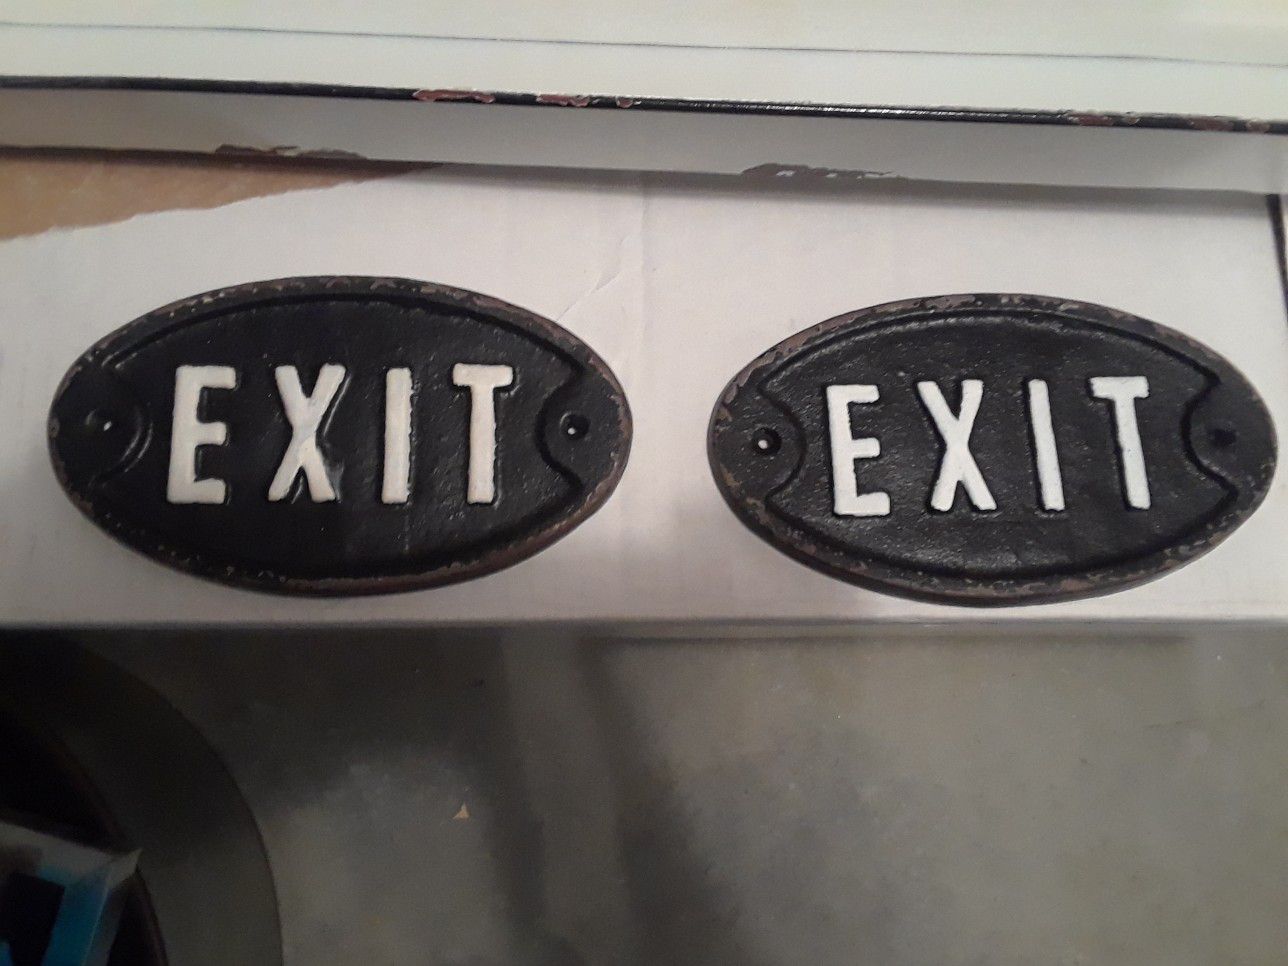 Heavy Exit signs